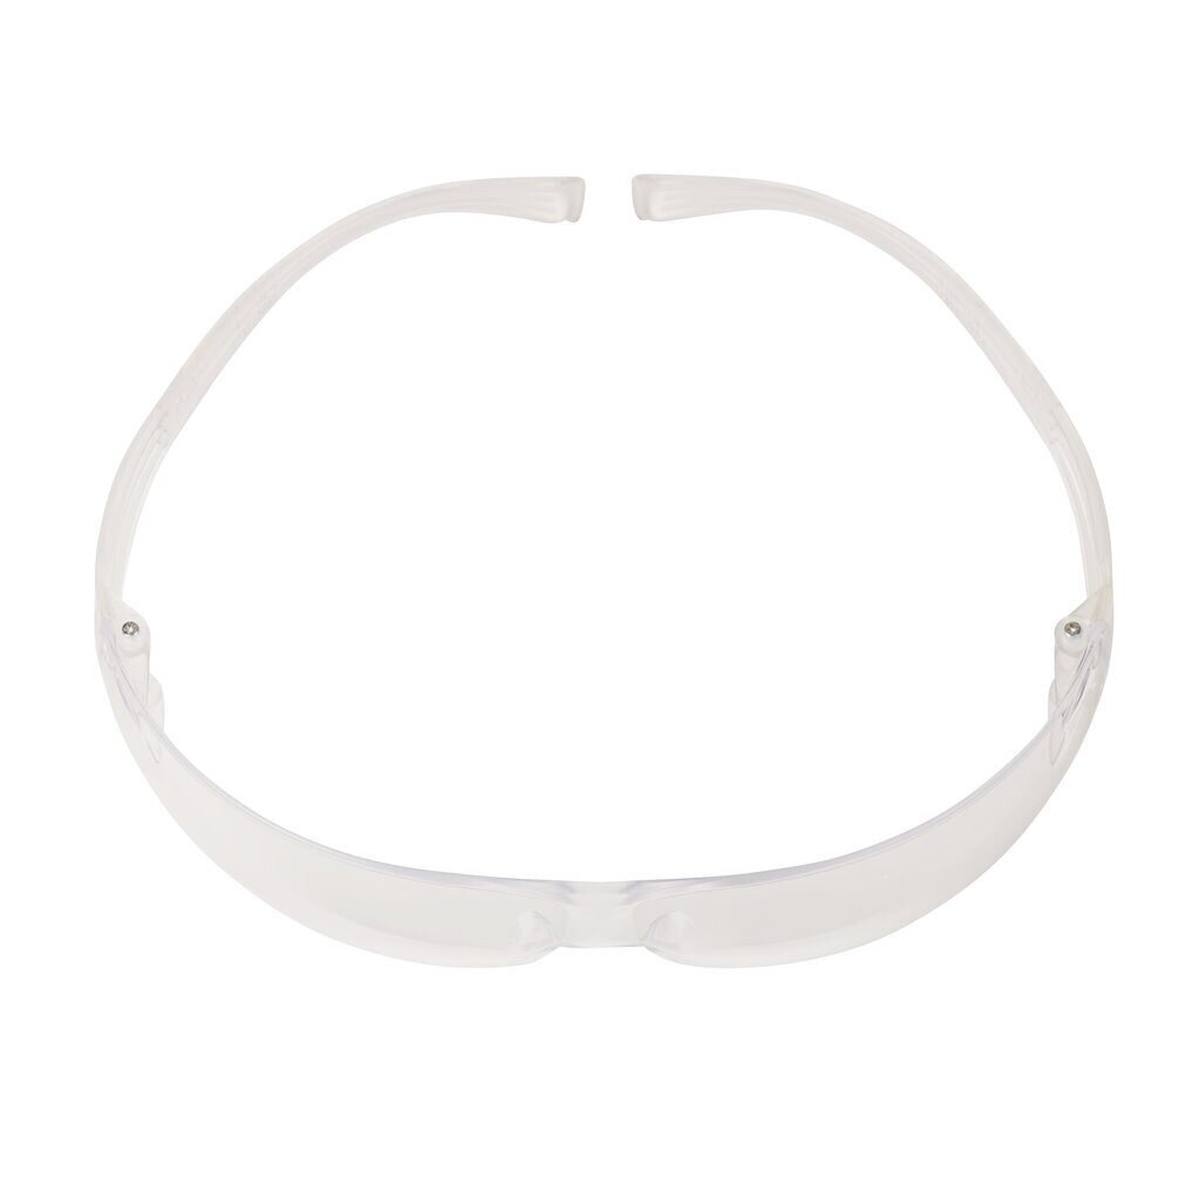 Occhiali di sicurezza 3M SecureFit 400 Reader, aste nere/verdi, rivestimento antigraffio/antiappannamento, lente trasparente con resistenza 1,5, SF415AS/AF-EU